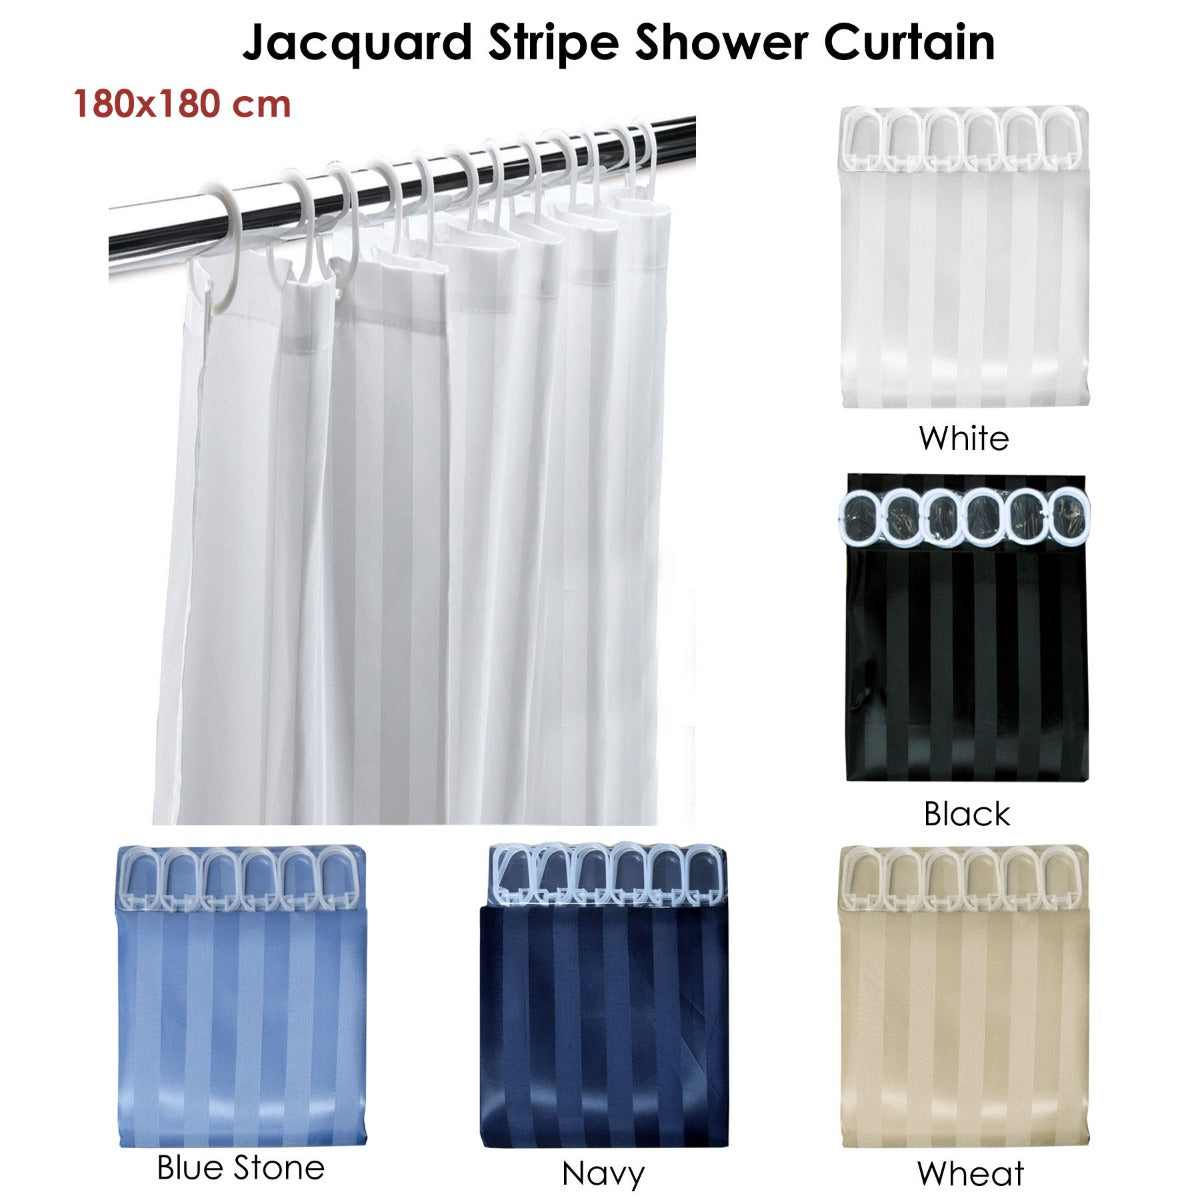 Jacquard Stripe Shower Curtain Wheat - BM House & Garden